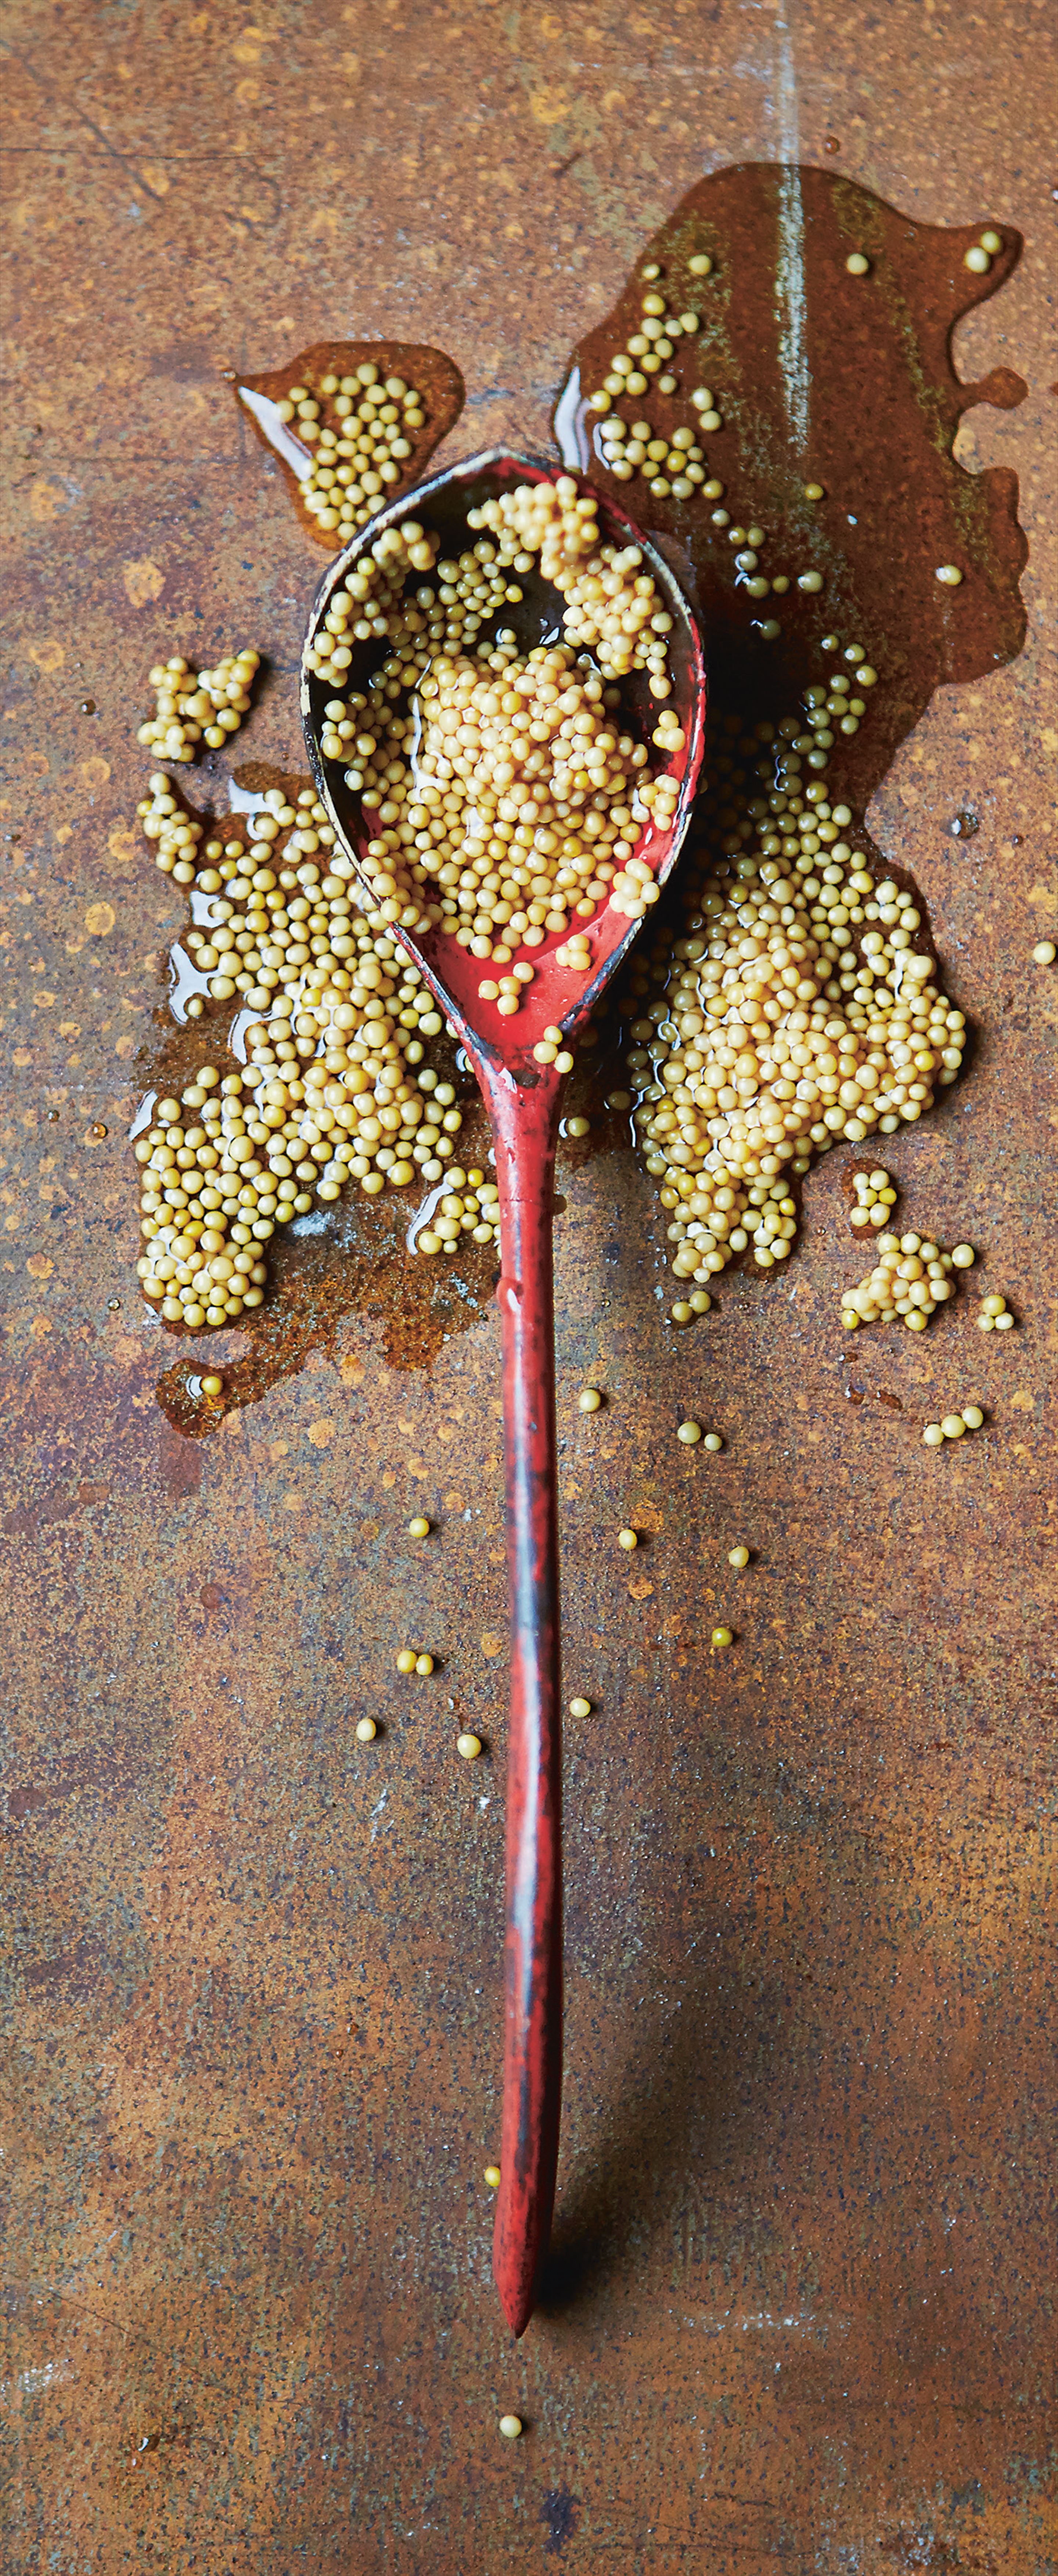 Pickled mustard seeds